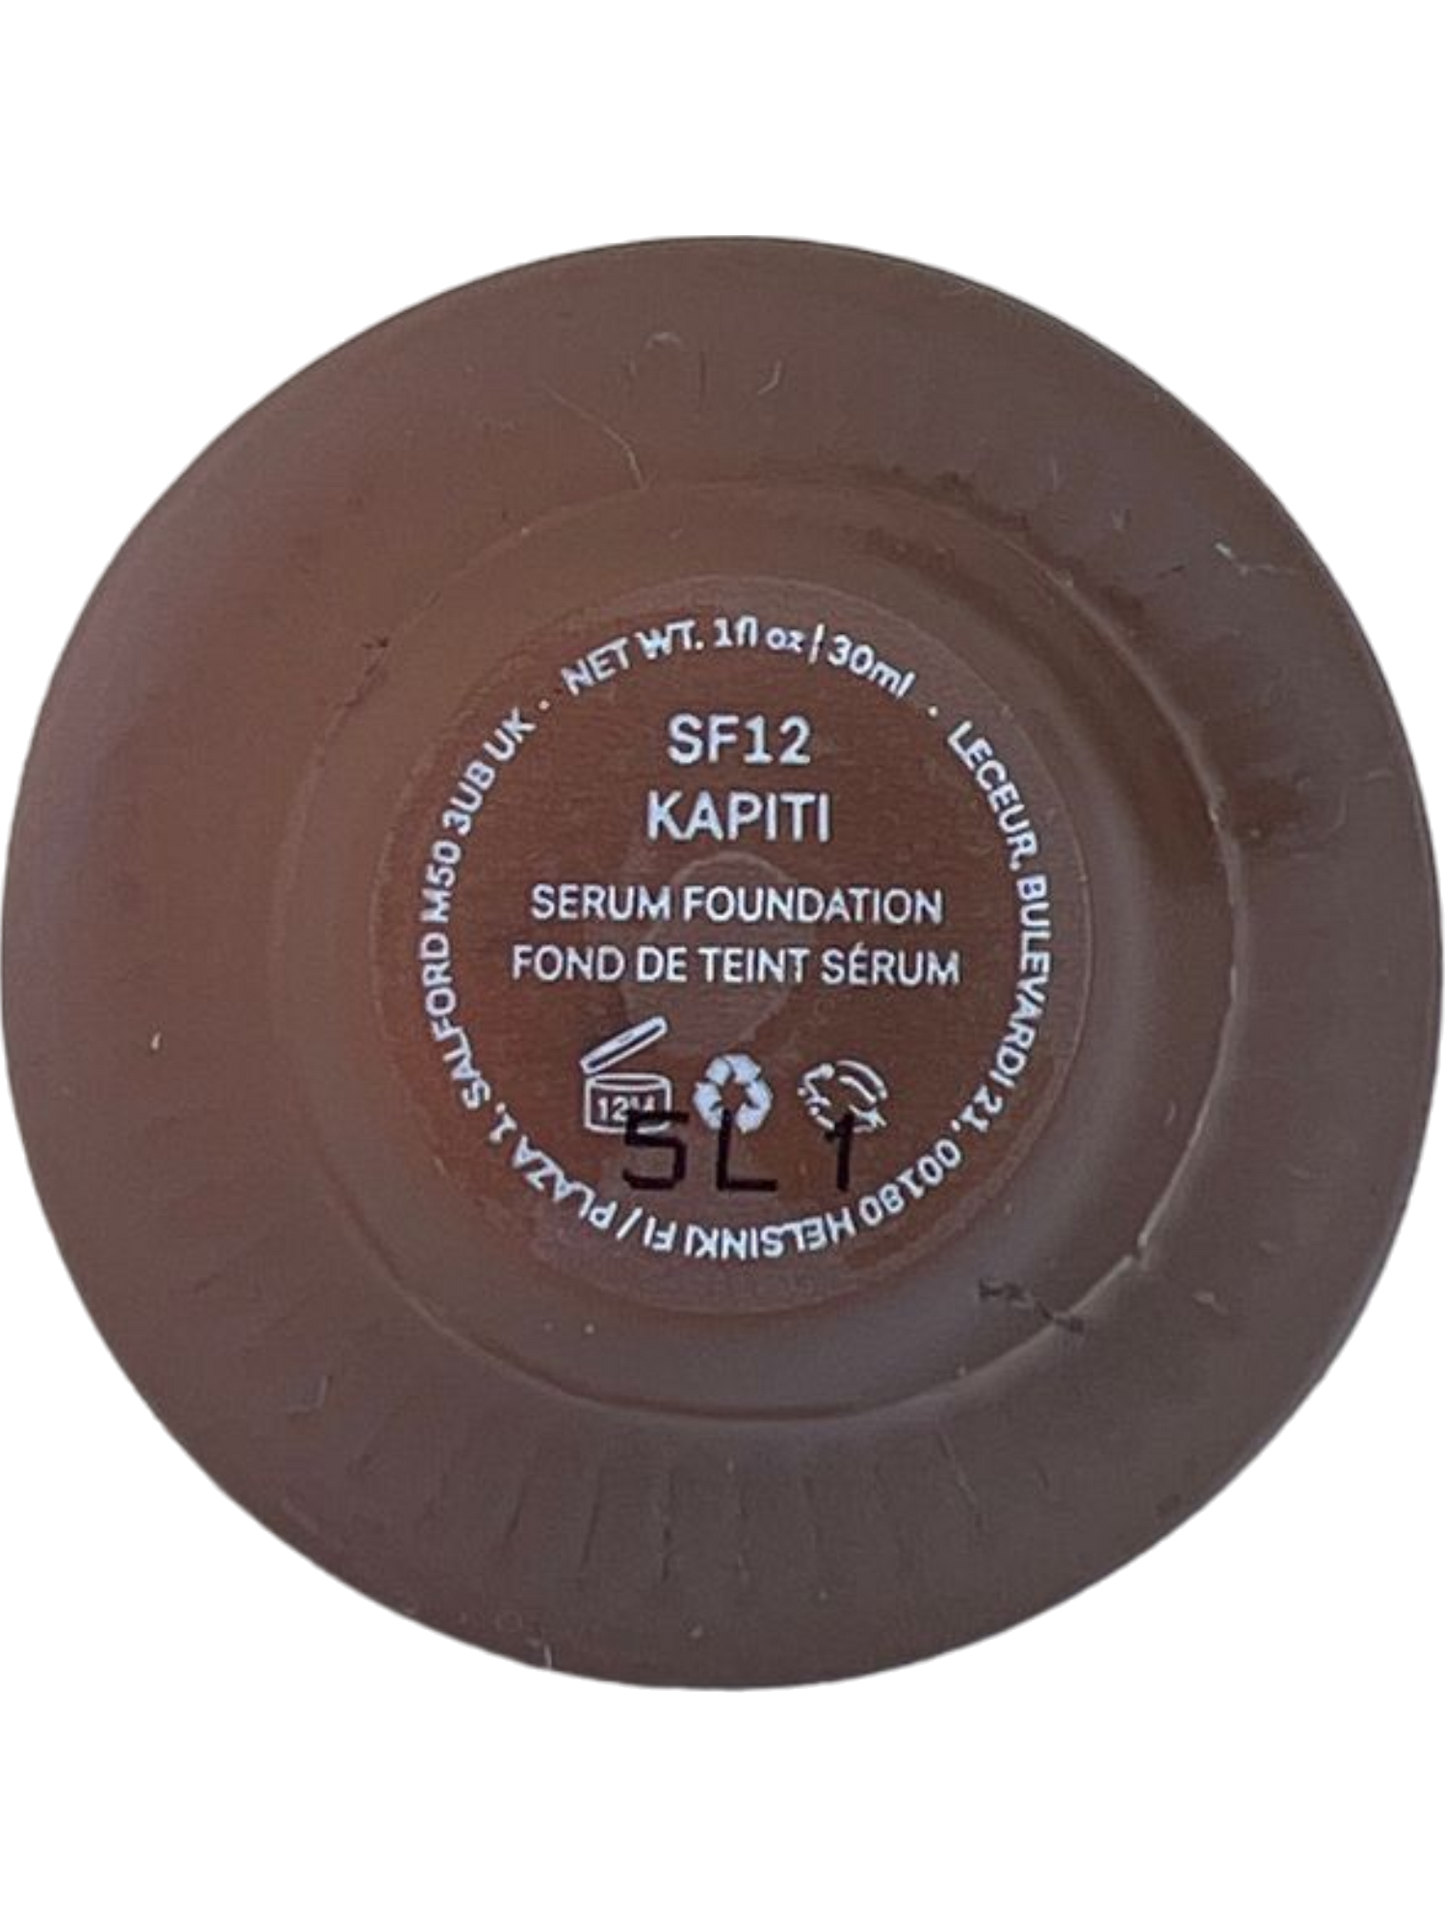 ILIA True Skin Serum Foundation SPF 12 in Shade Kapiti